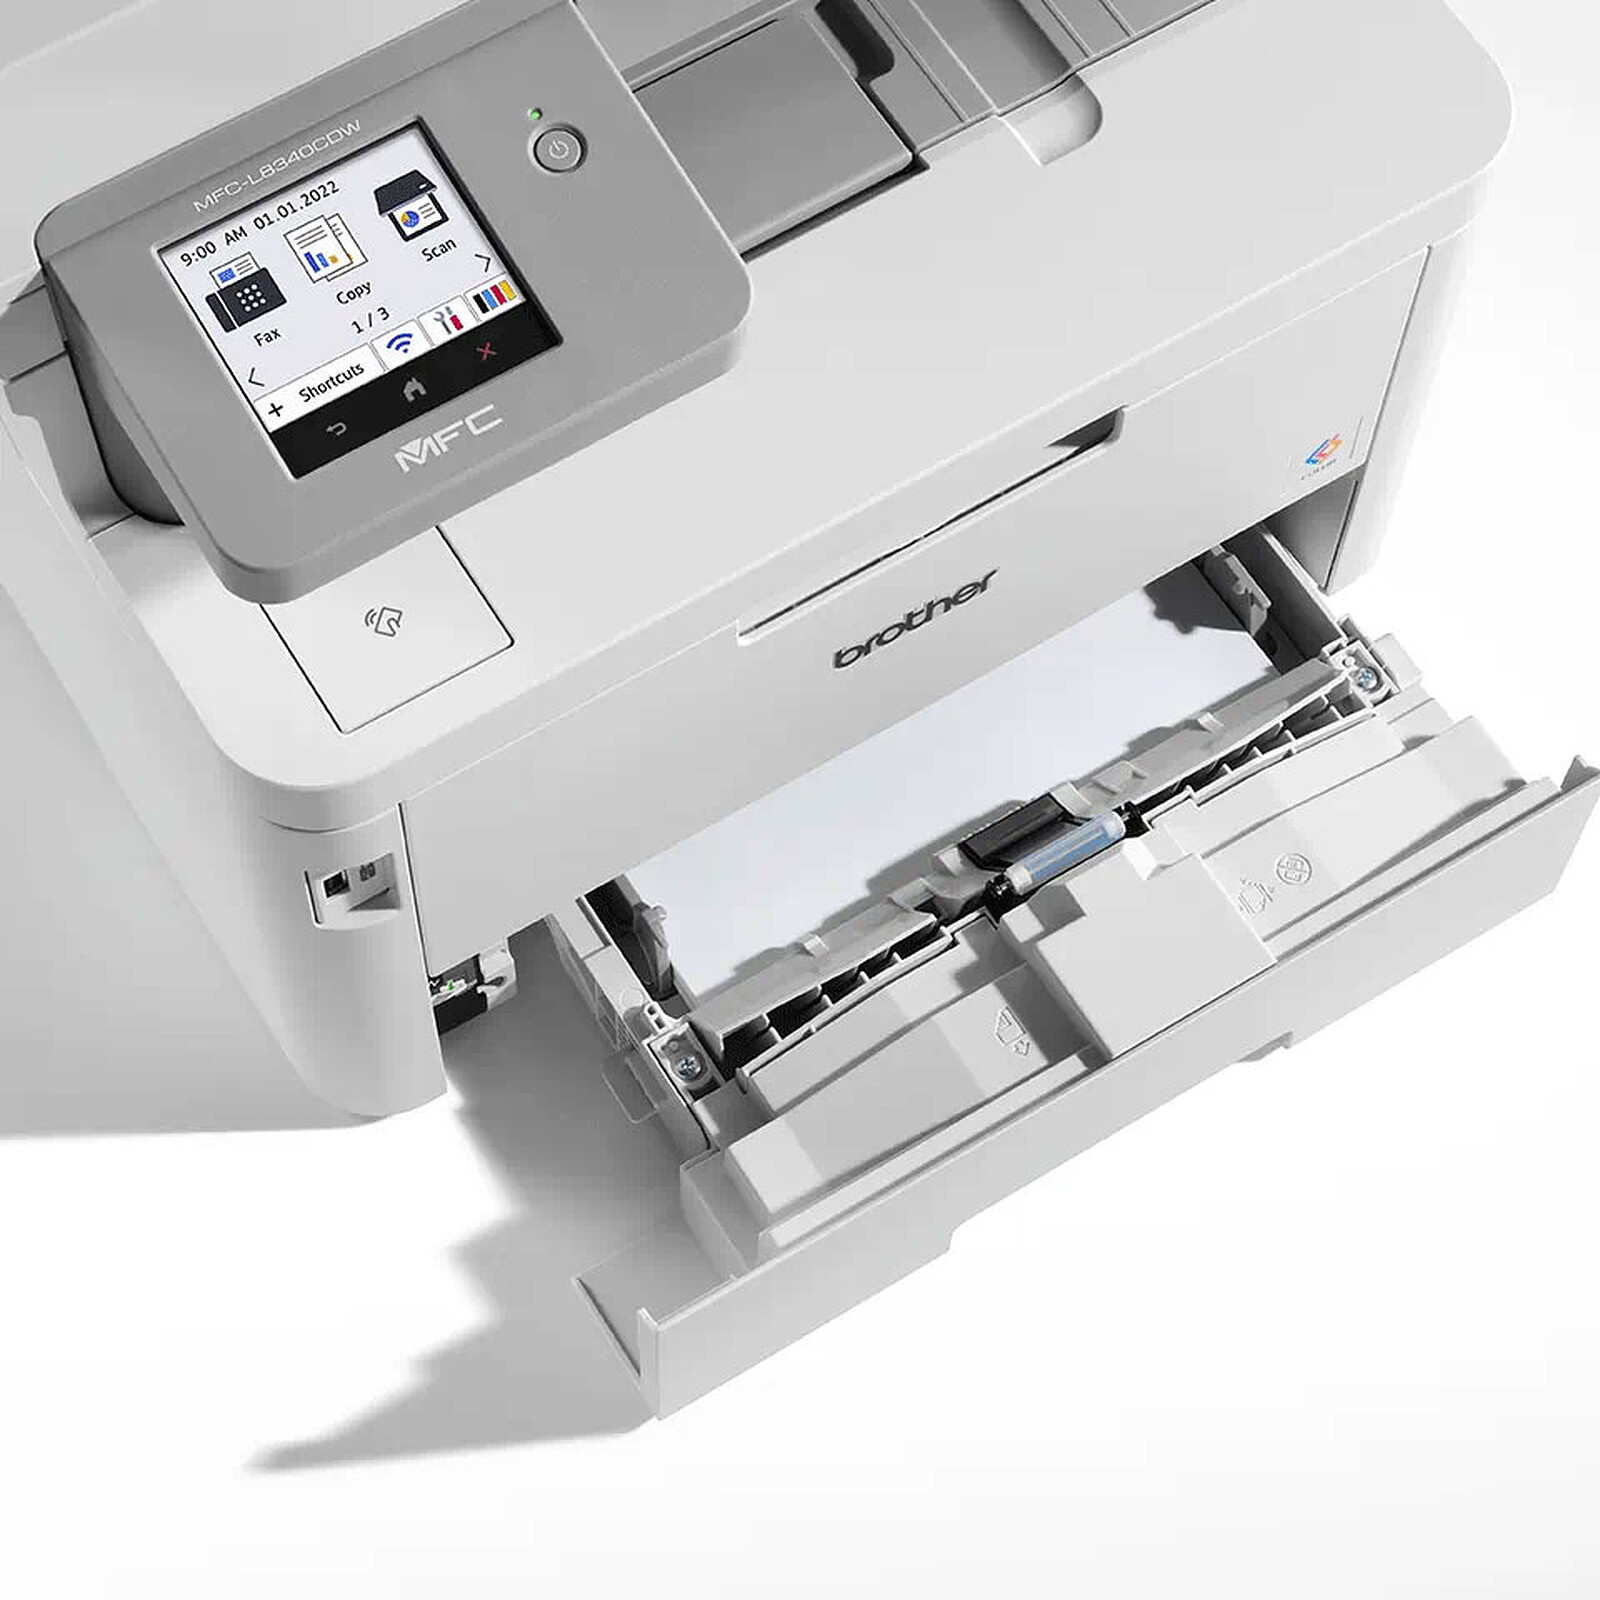 Brother MFC-3750CDW Imprimante Multifonction Laser Couleur LED Fax